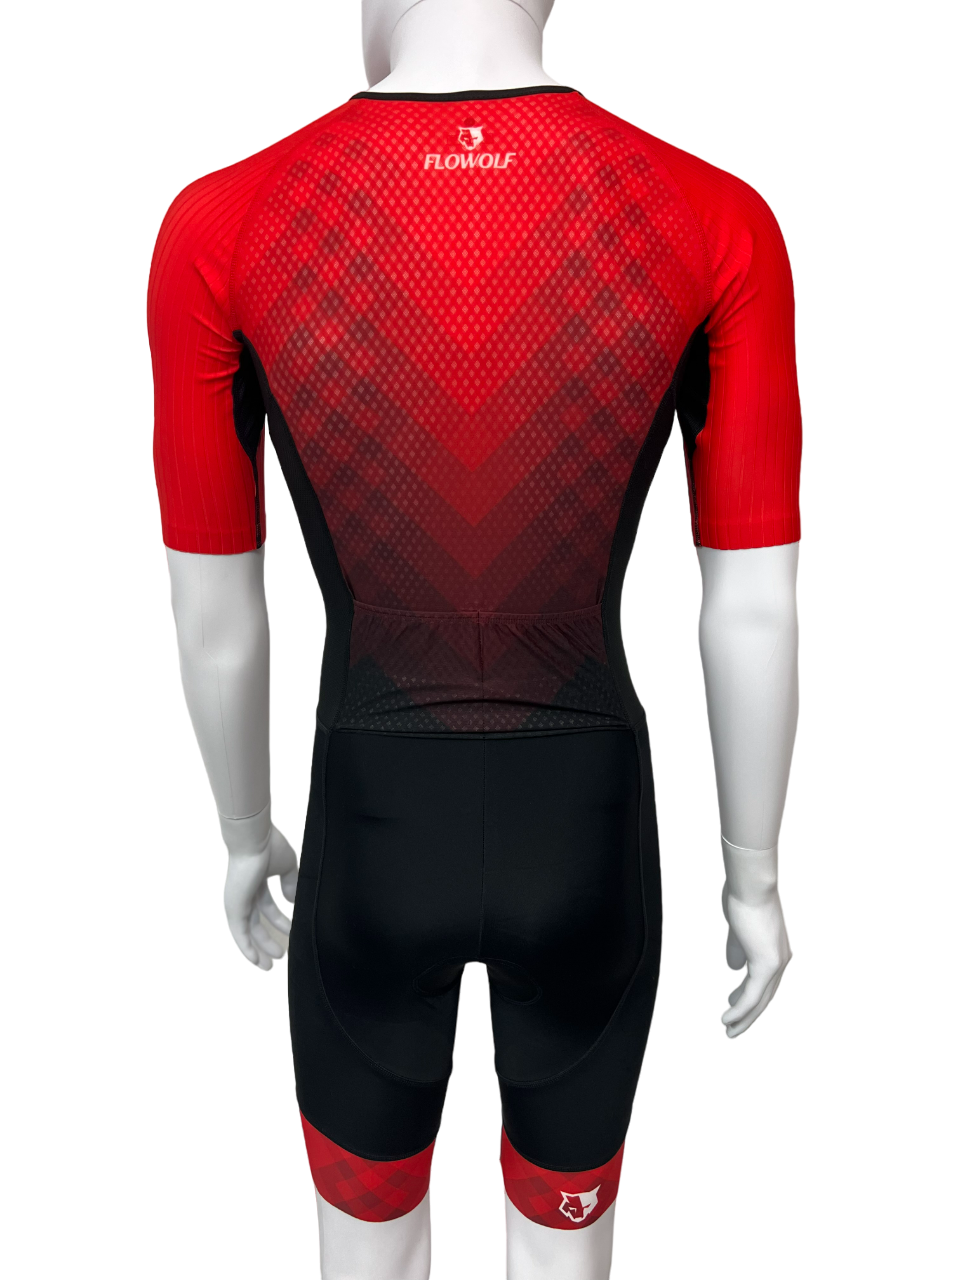 FLOWOLF SS Men's Triathlon Race Suit - Red